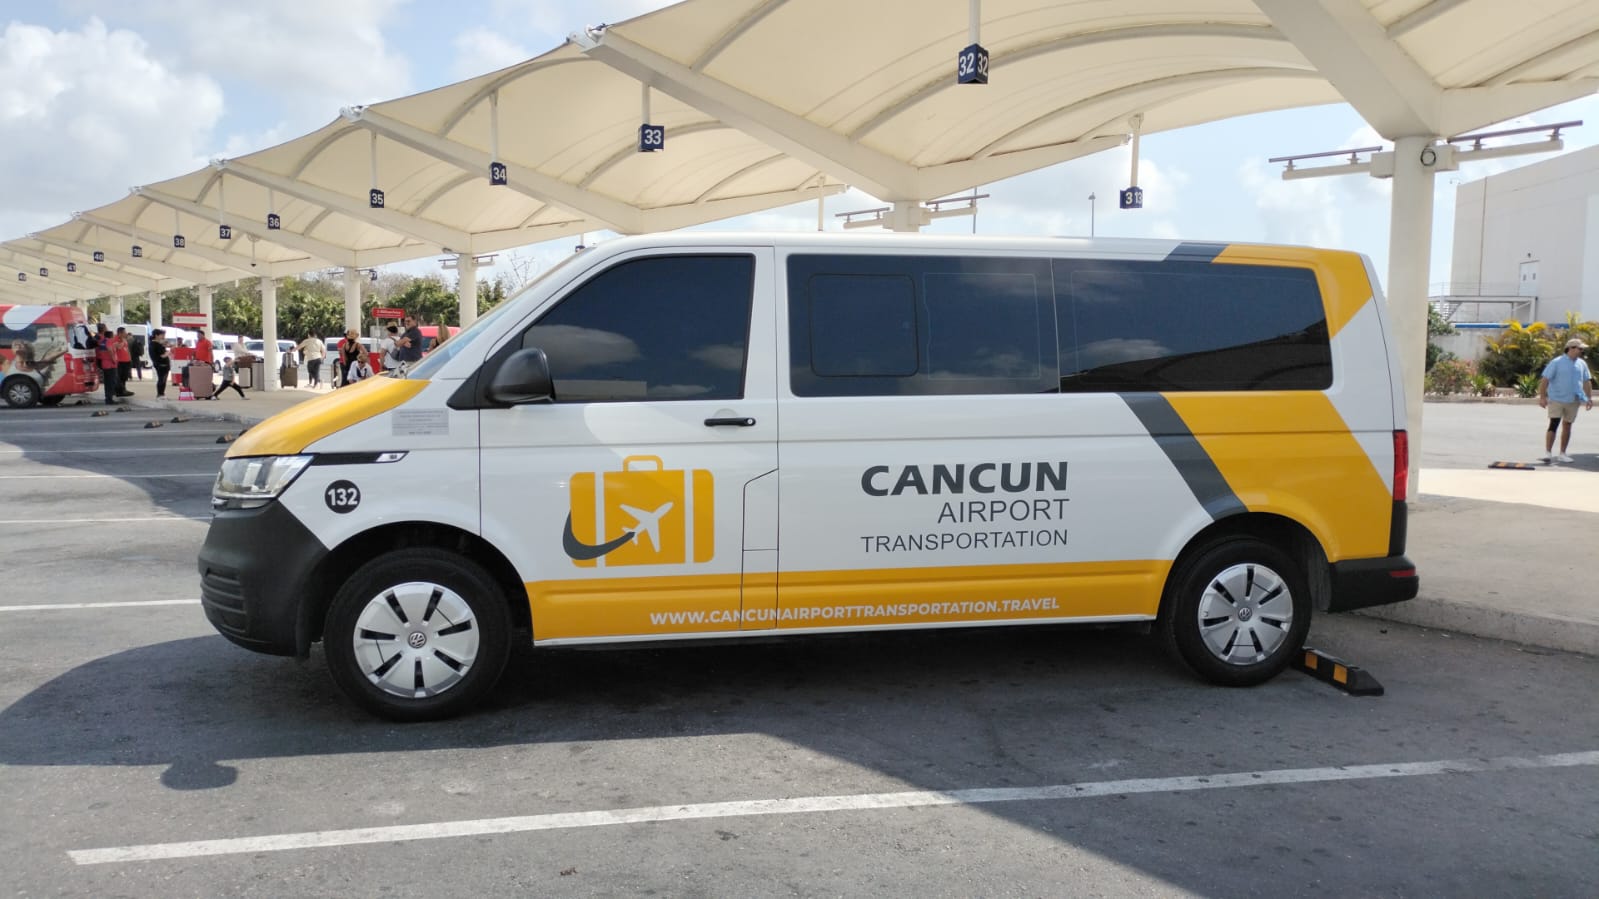 Private Cancun Airport Transportation